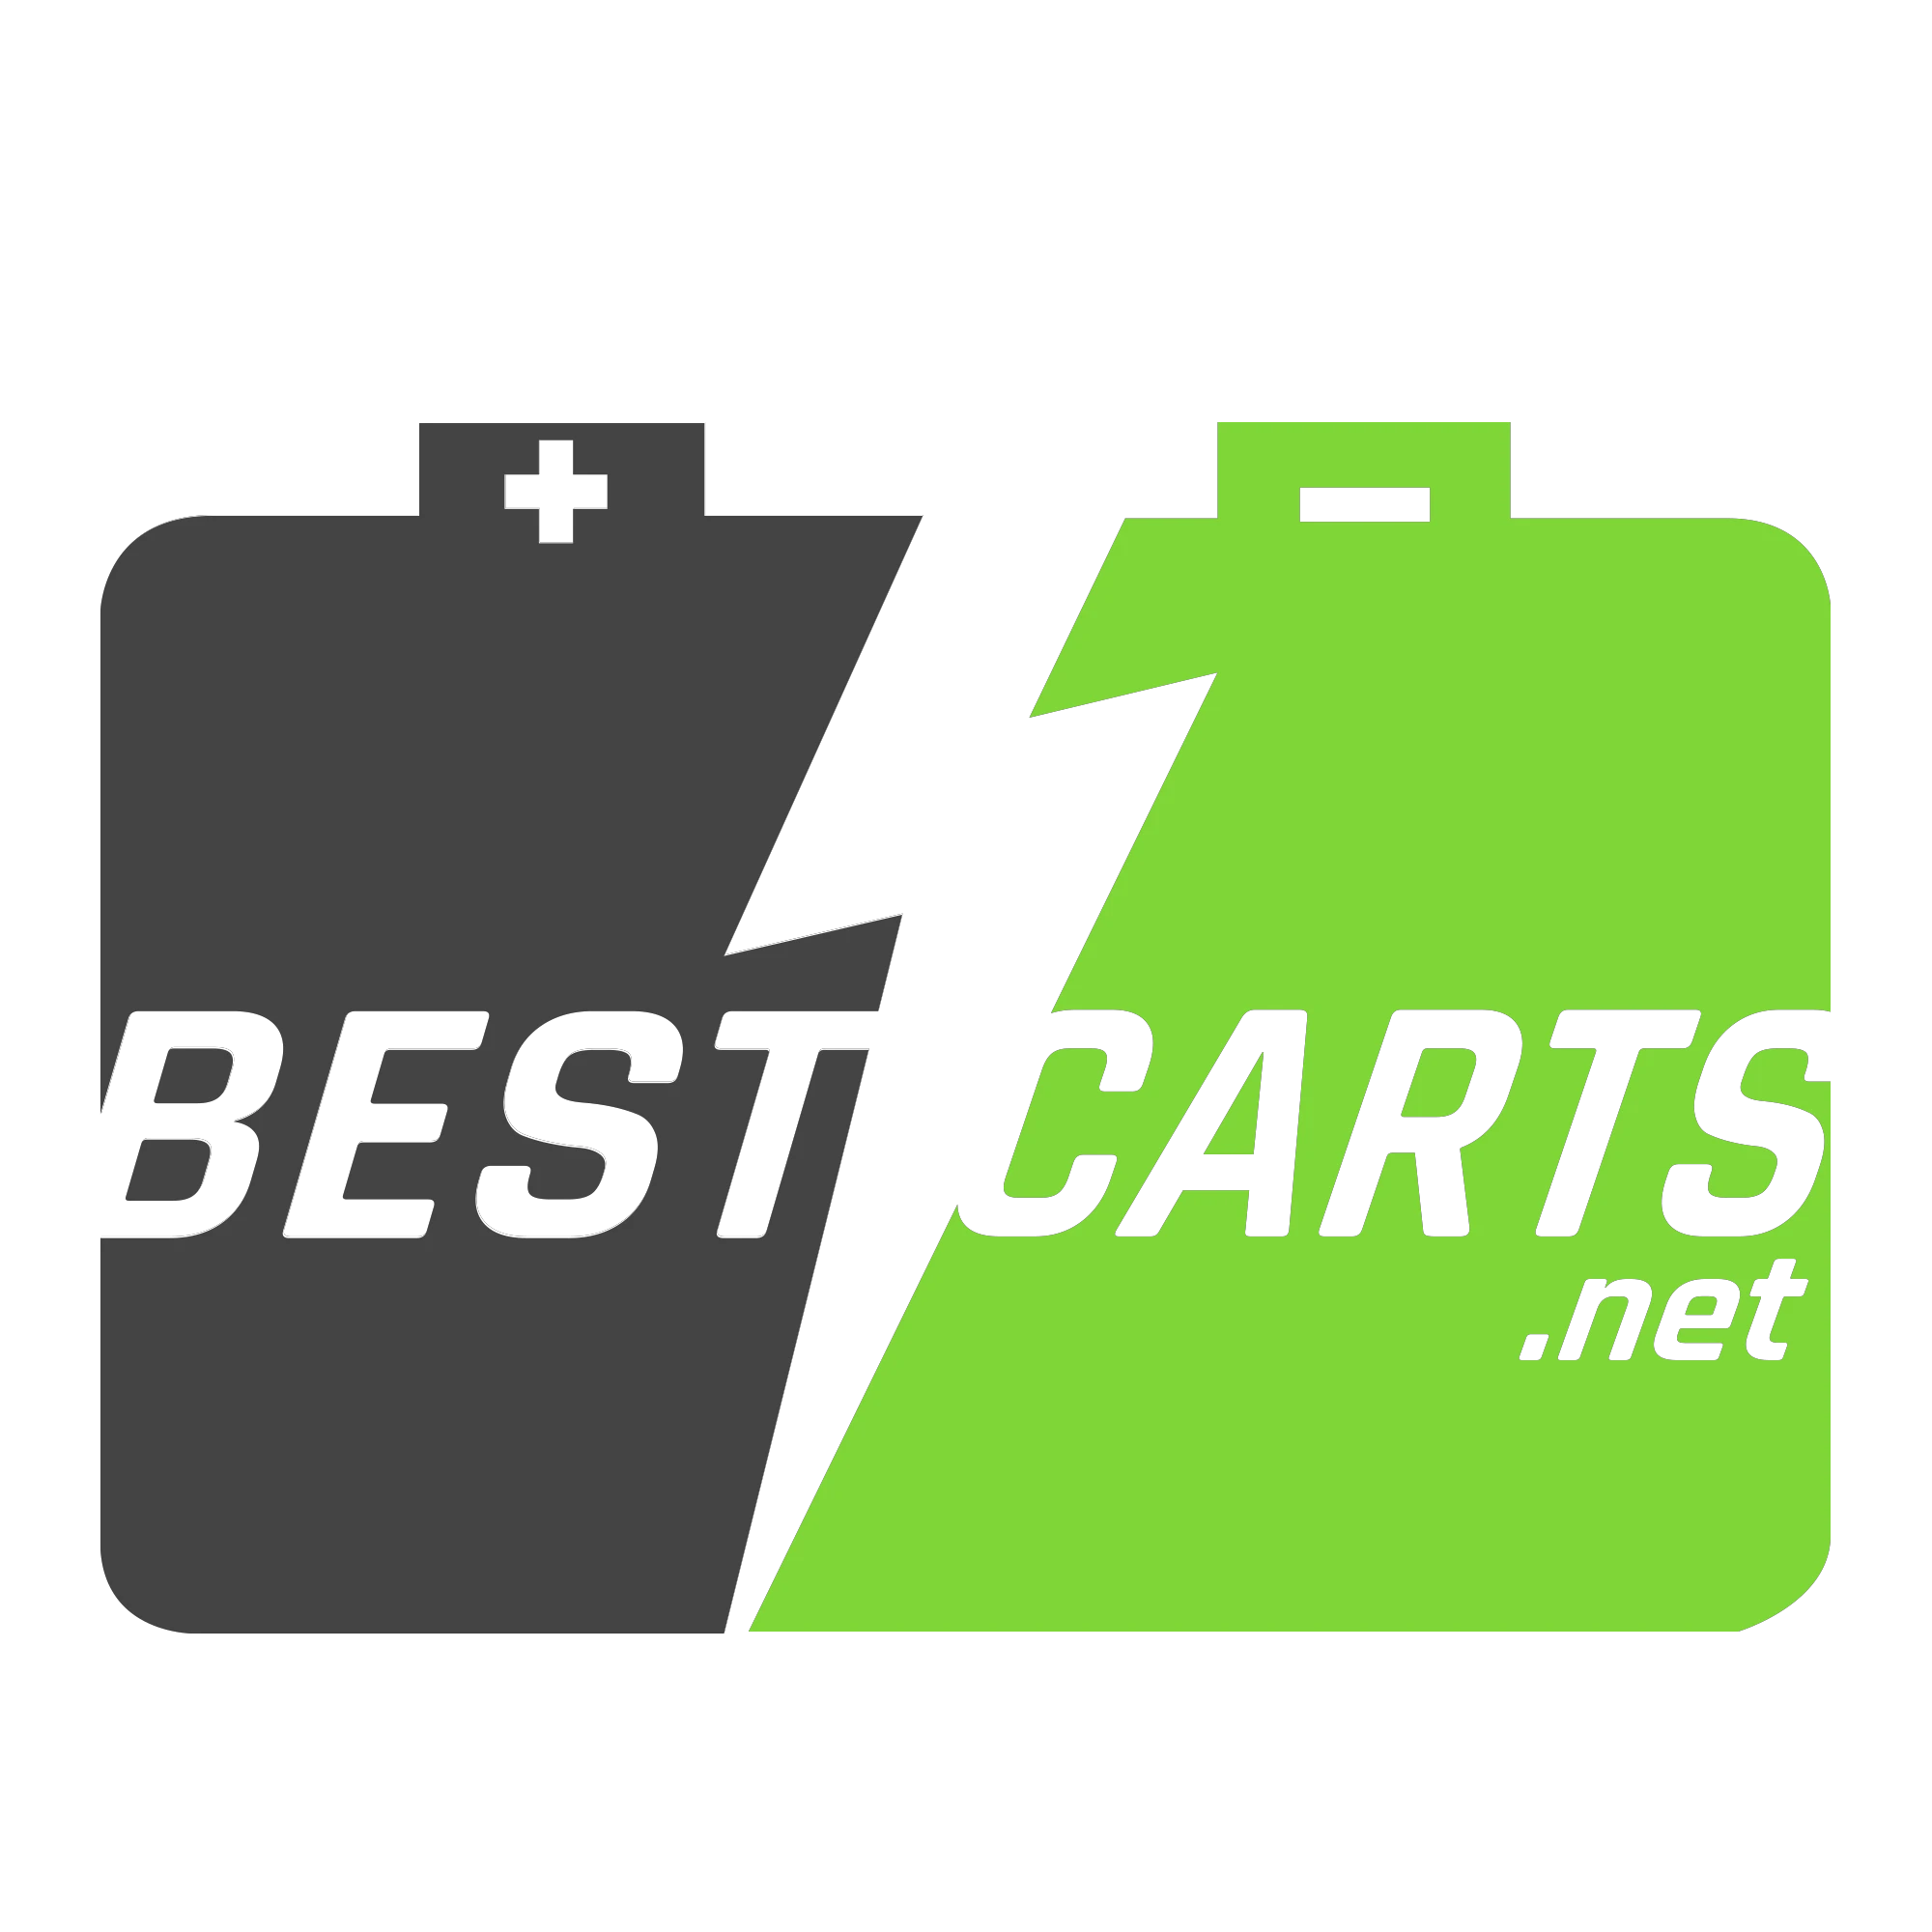 bestcarts.net